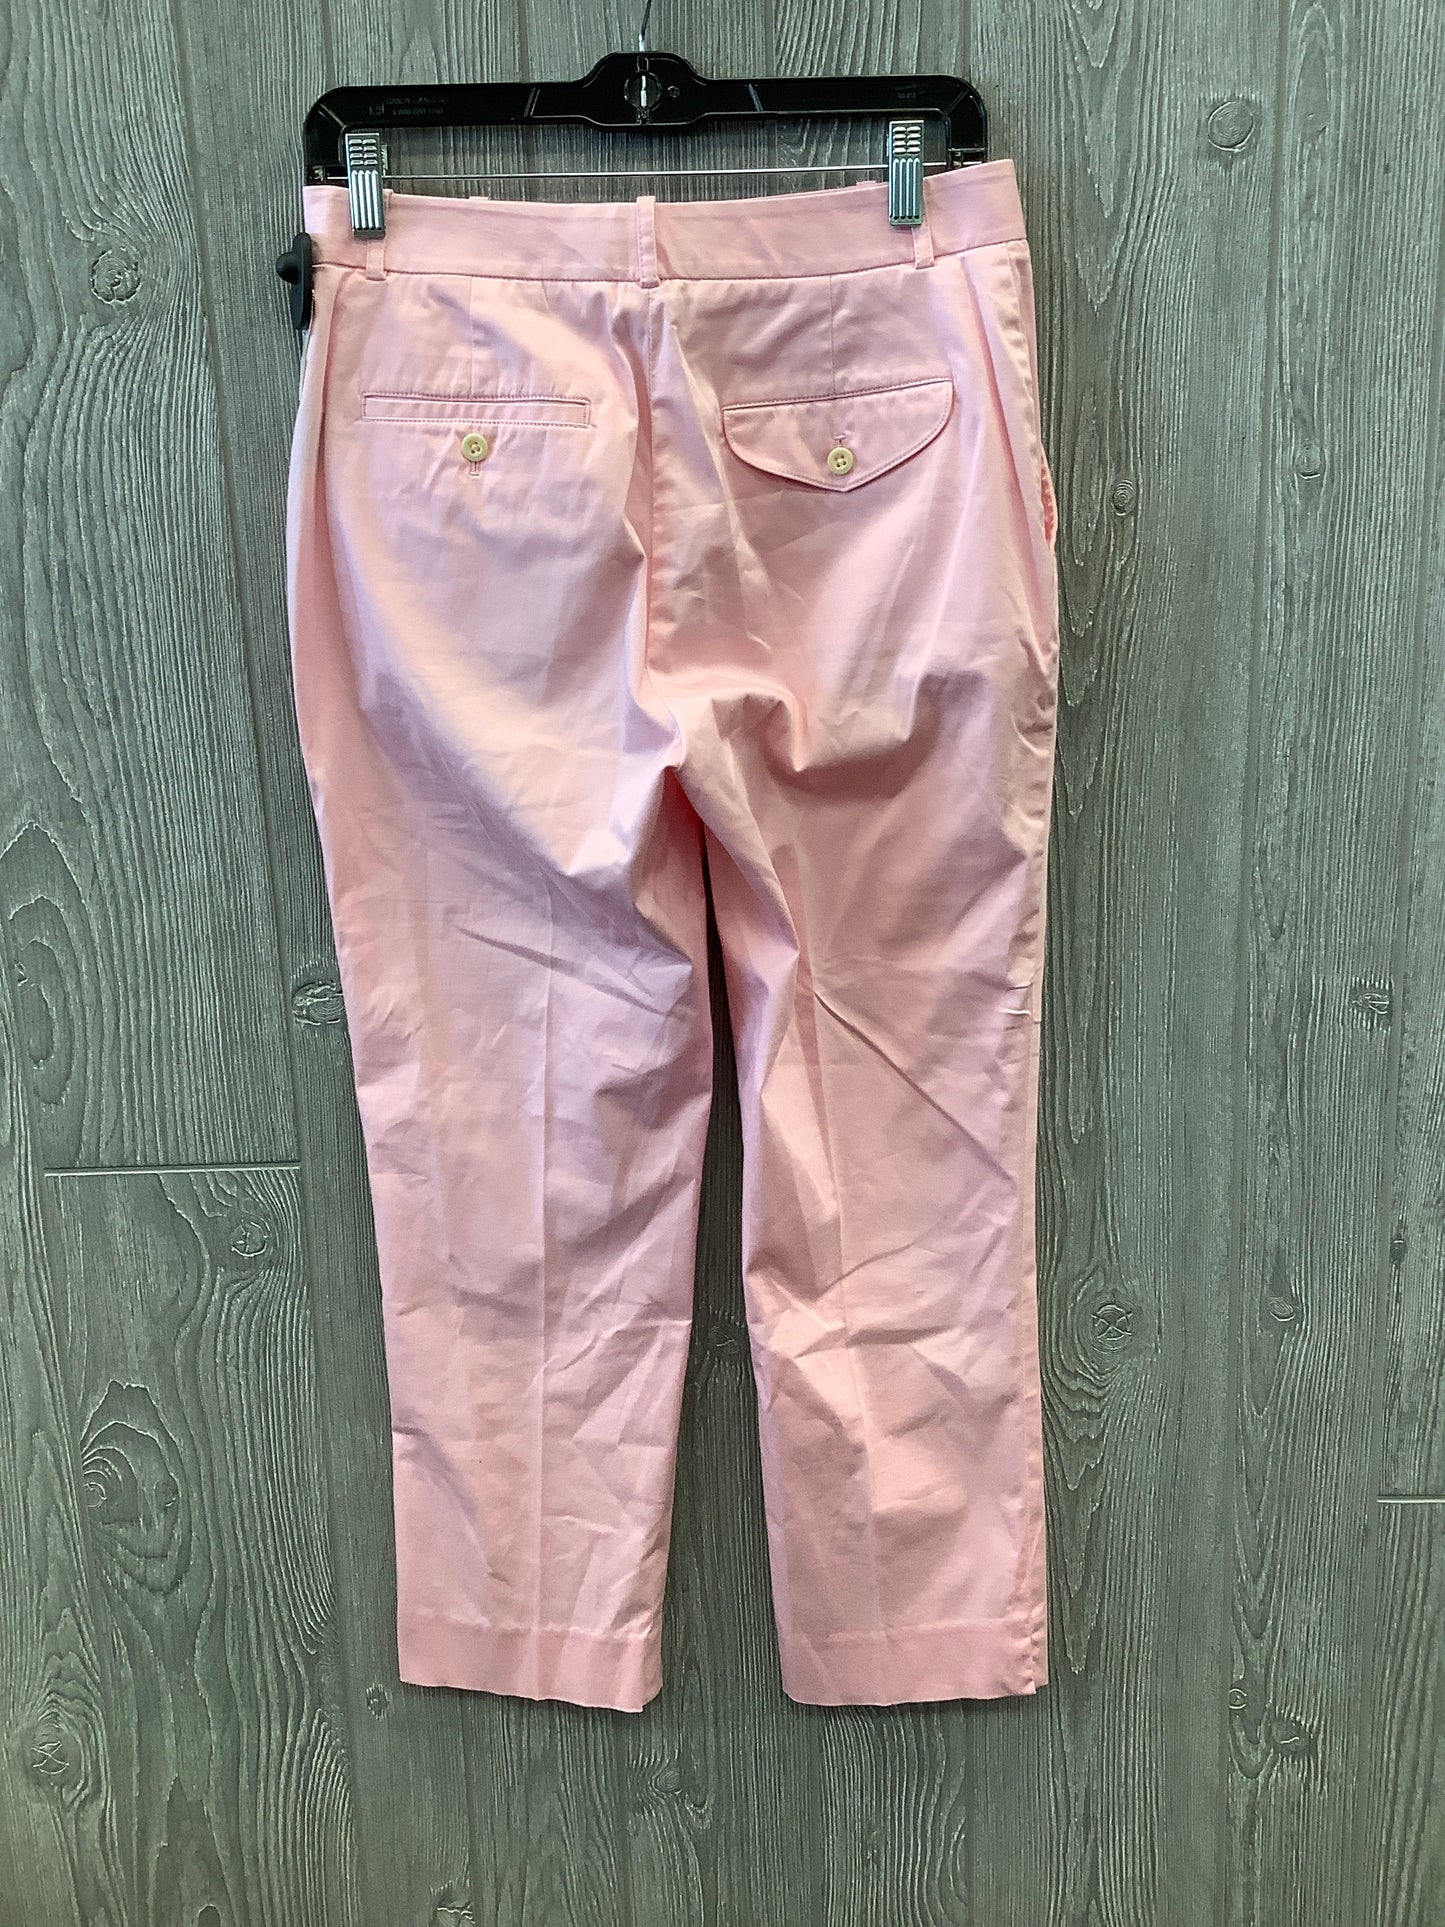 Pink Pants Dress Ralph Lauren, Size 4